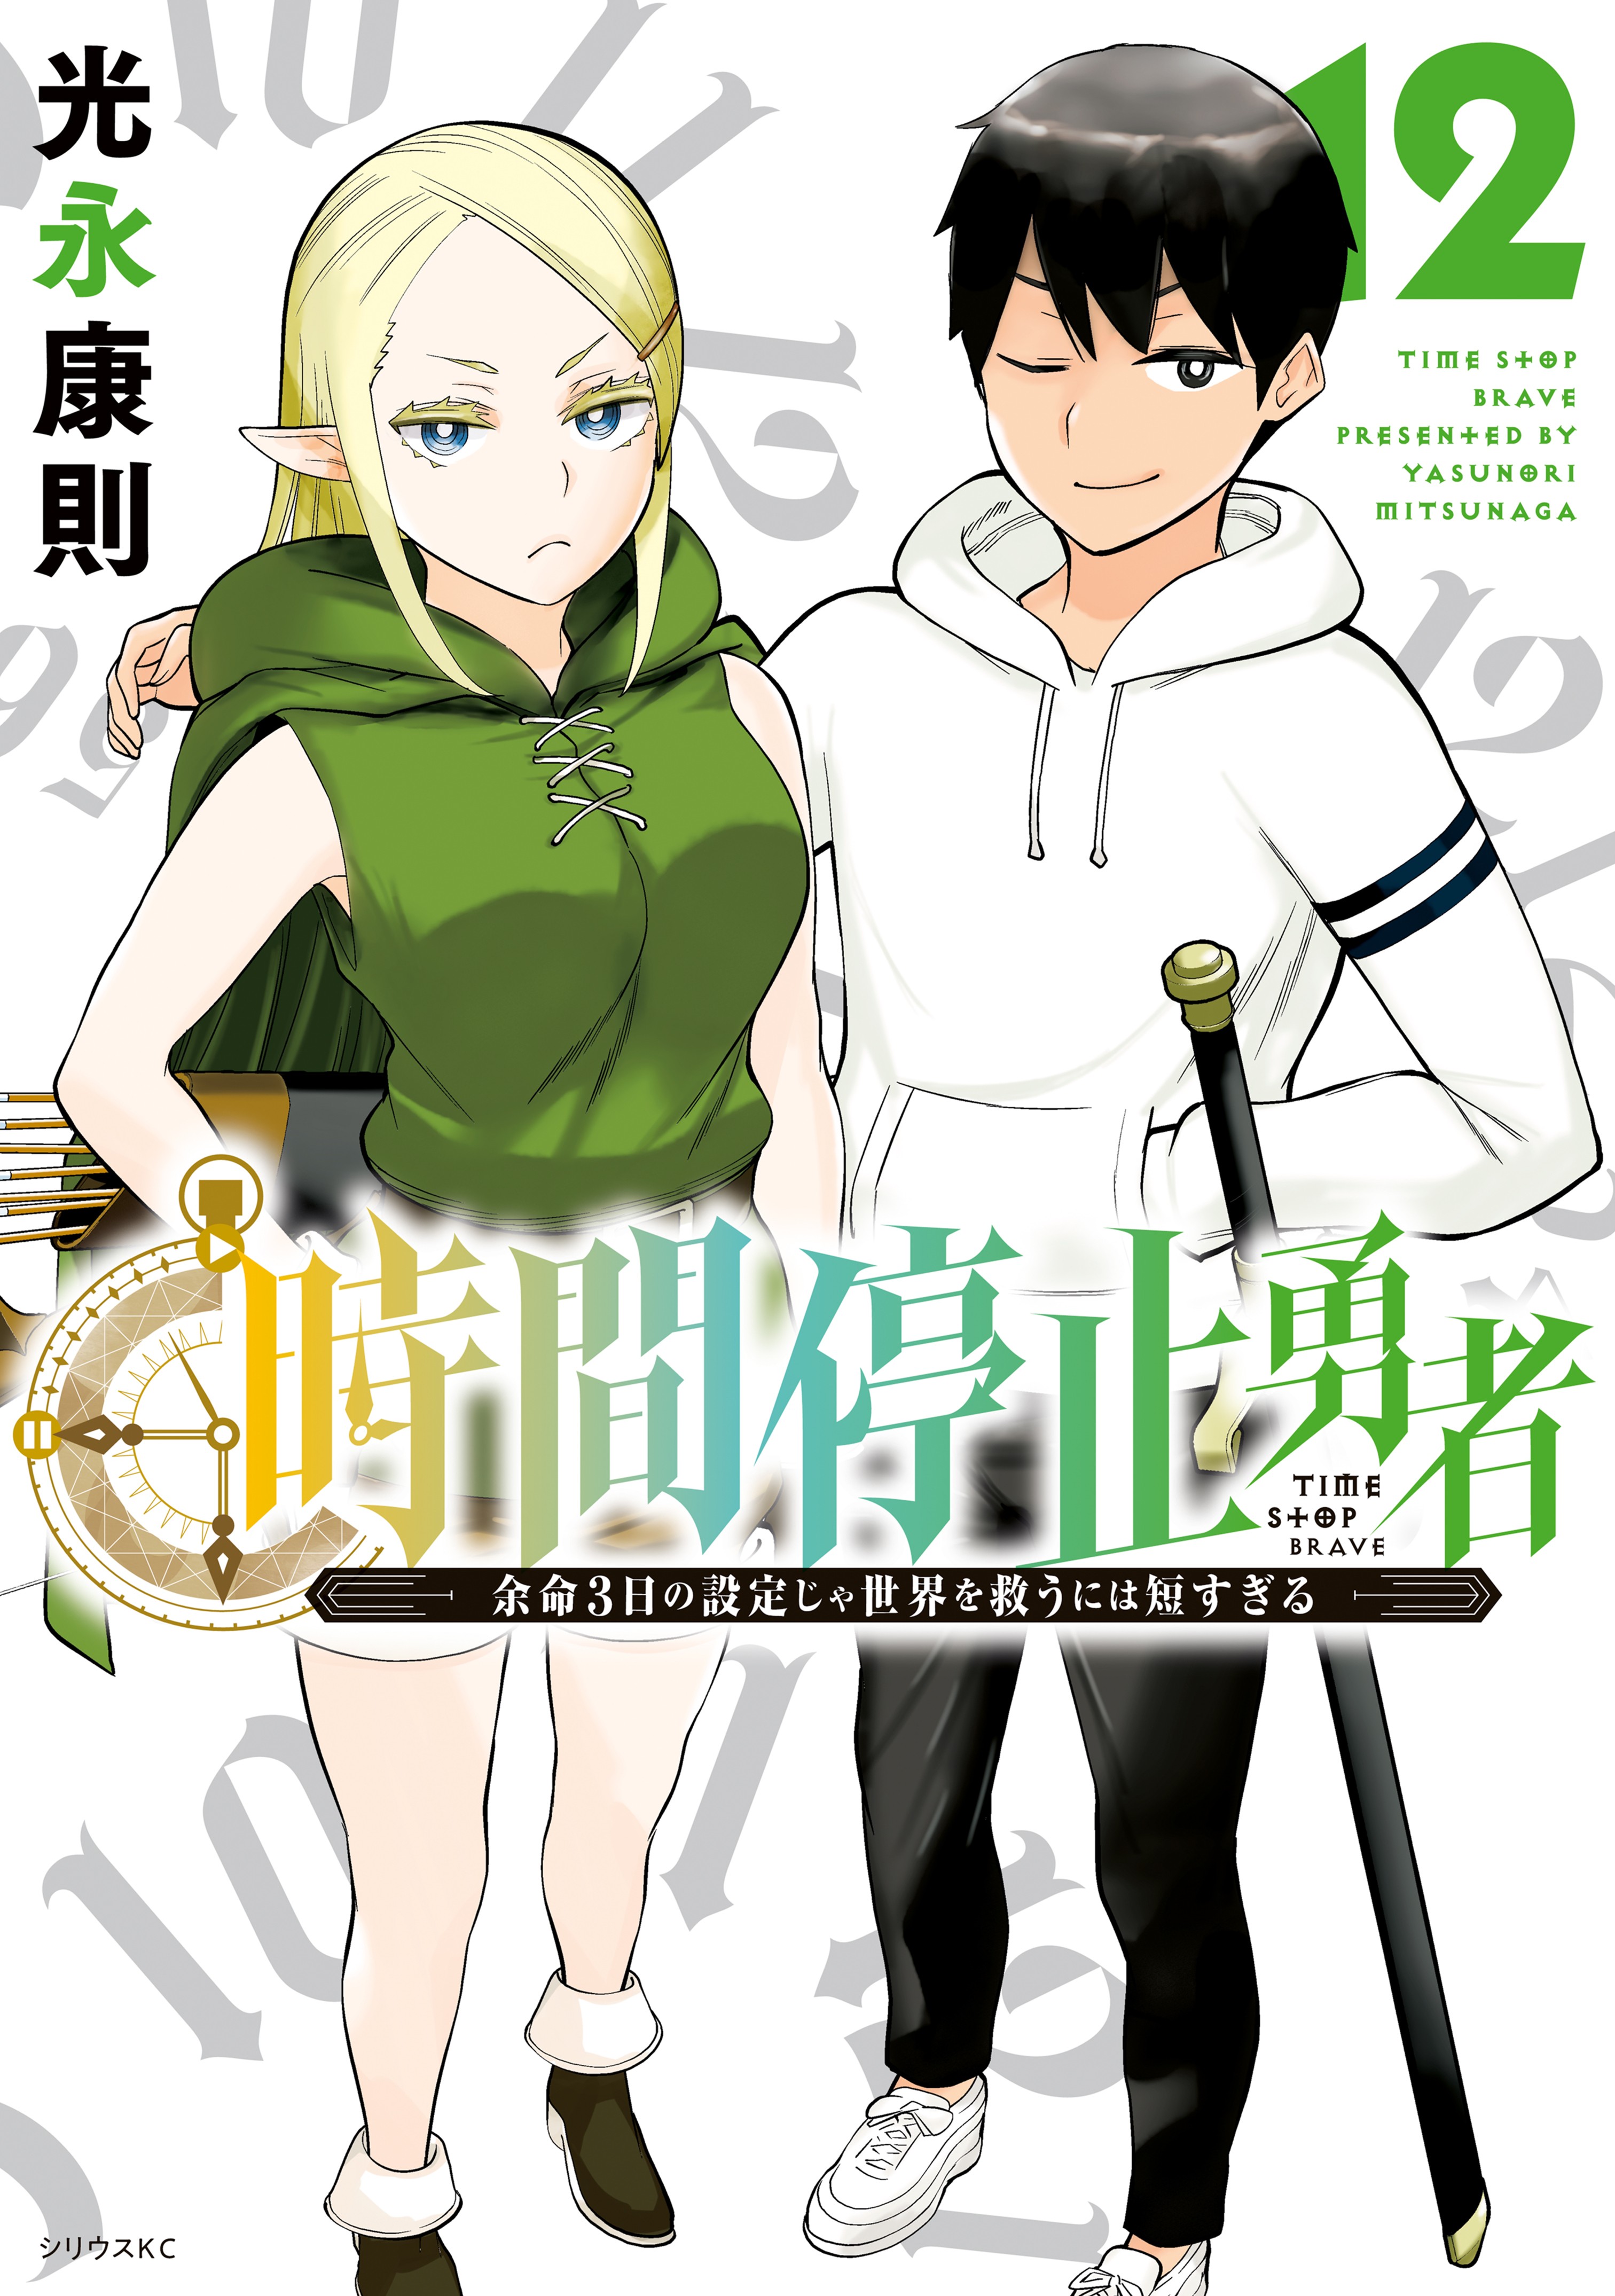 Time Stop Hero Vol. 7 Mangá eBook de Yasunori Mitsunaga - EPUB